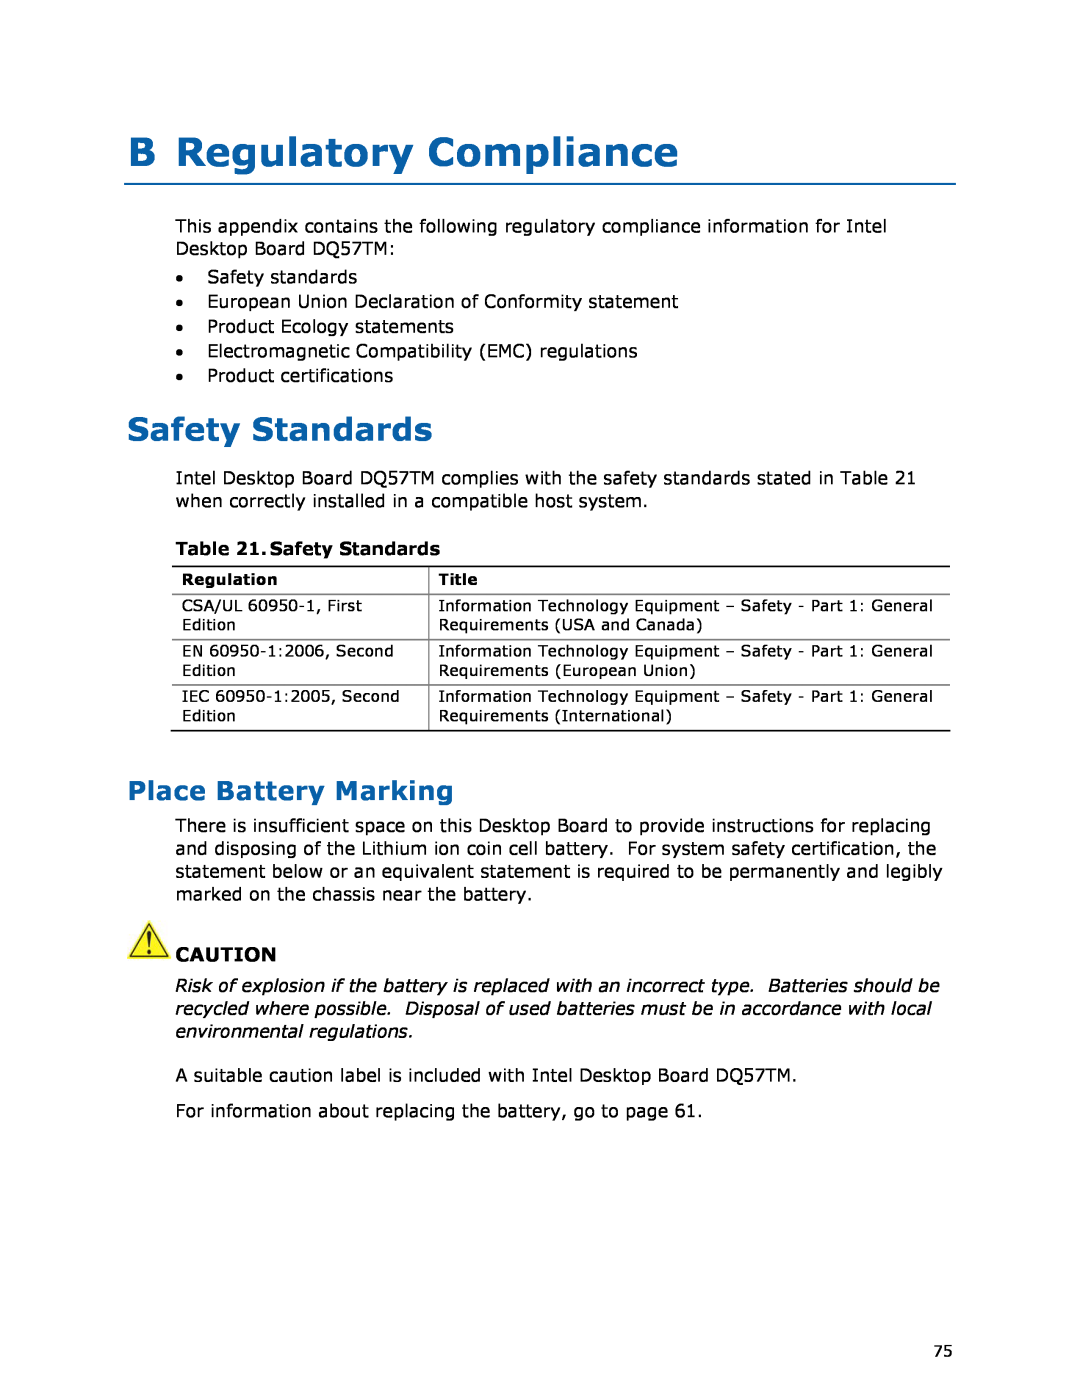 Intel DQ57TM manual B Regulatory Compliance, Safety Standards, Place Battery Marking 